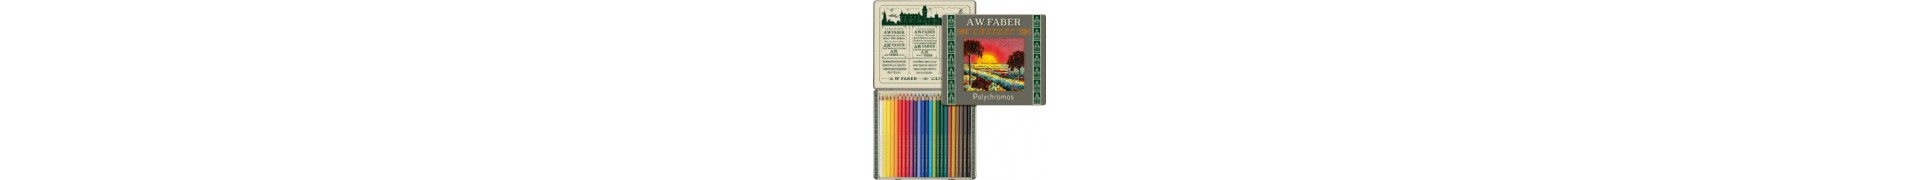 Boite crayon de couleur FABER & CASTELL Polychromos 111 ans - 24 crayons Polychromos 110012 (Métal) 